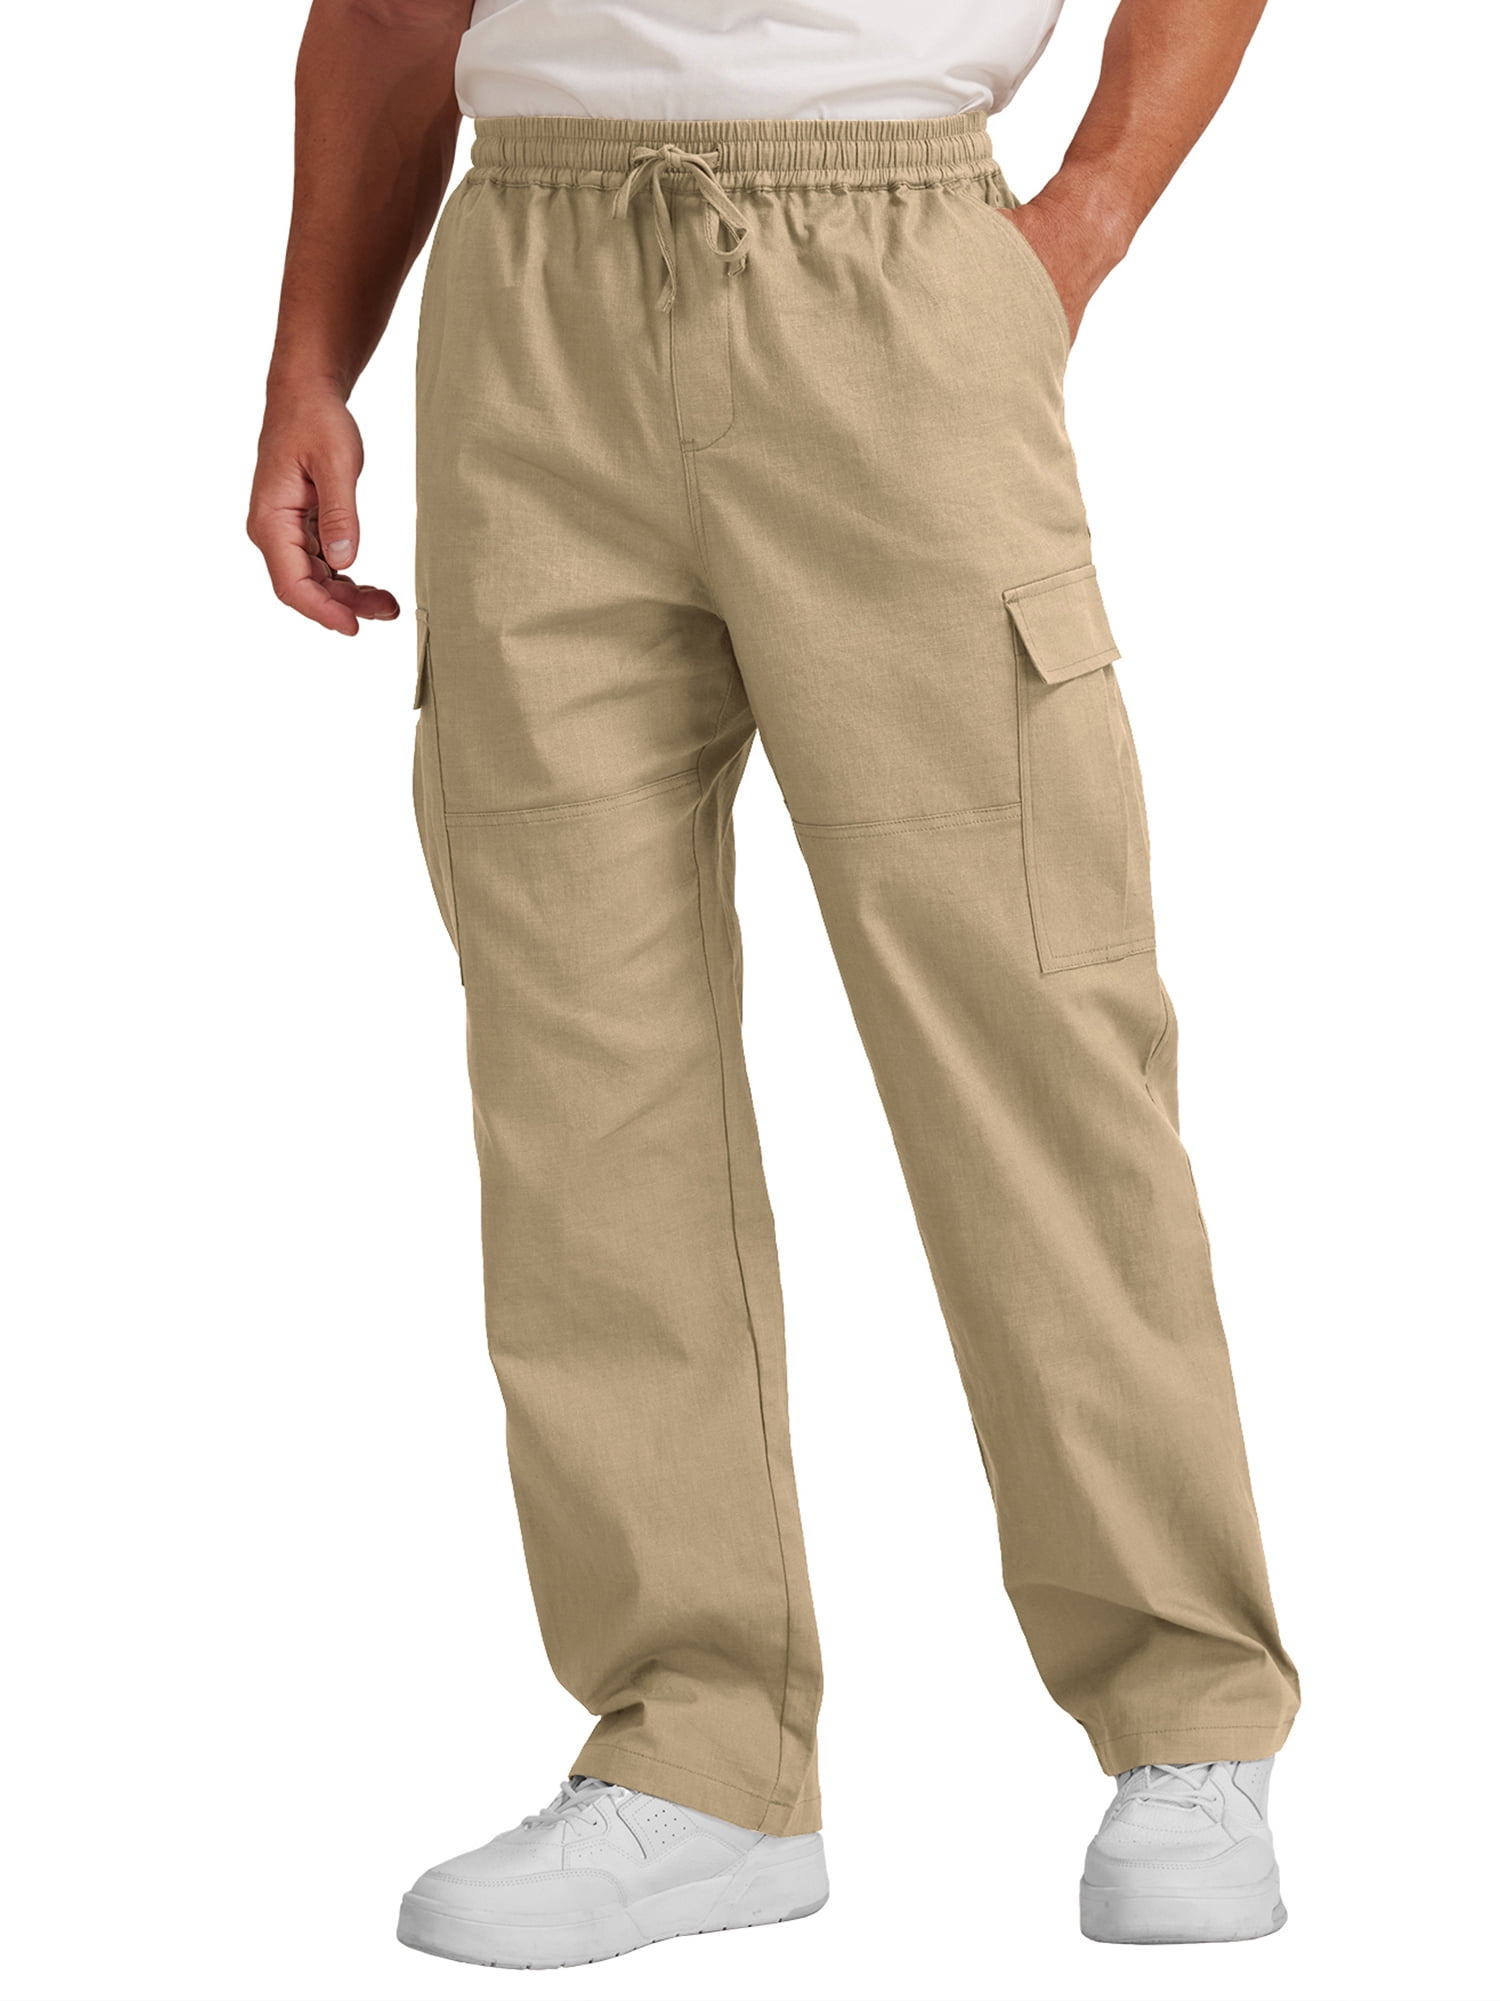 Aayomet Mens Work Pants Men's Sweatpants, EcoSmart Sweatpants for Men,  Men's Lounge Pants with Cinched Cuffs,White 3XL 